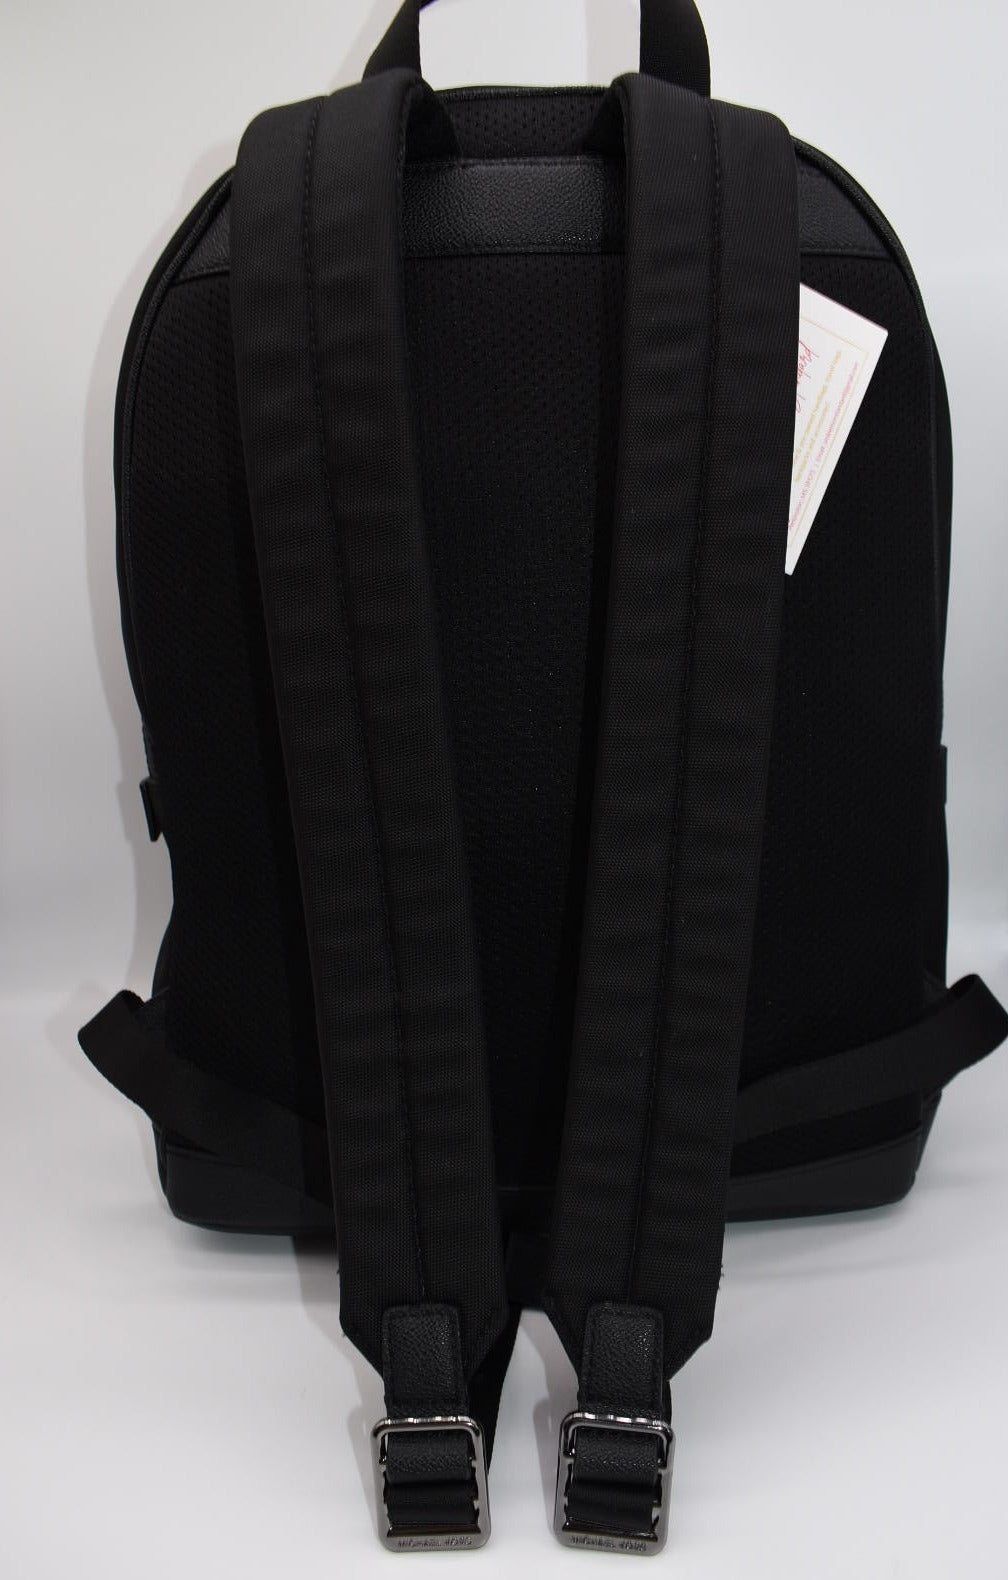 Michael Kors Kent Nylon Large Backpack